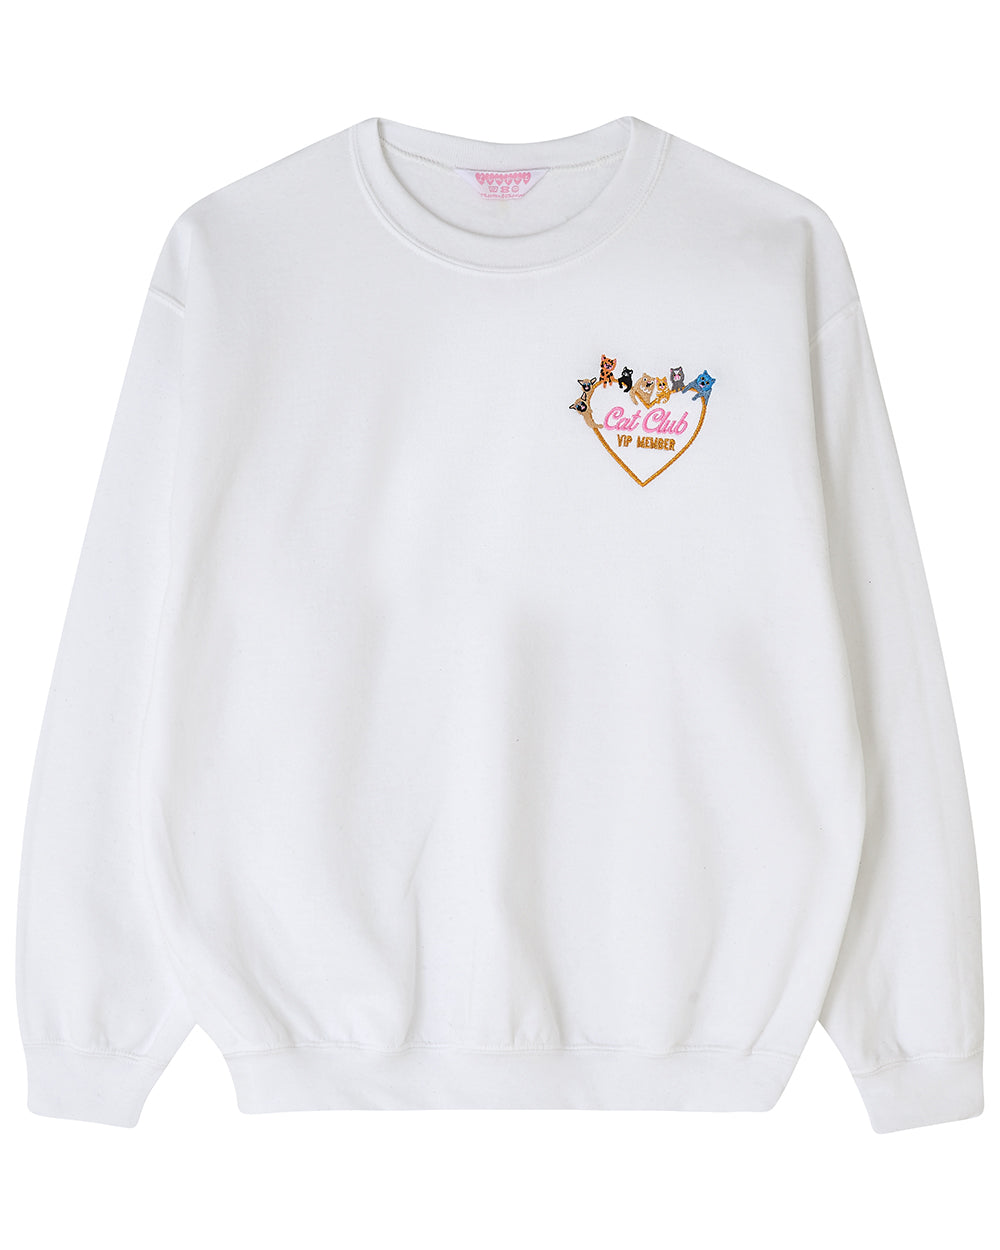 Cat Club Embroidered Sweatshirt